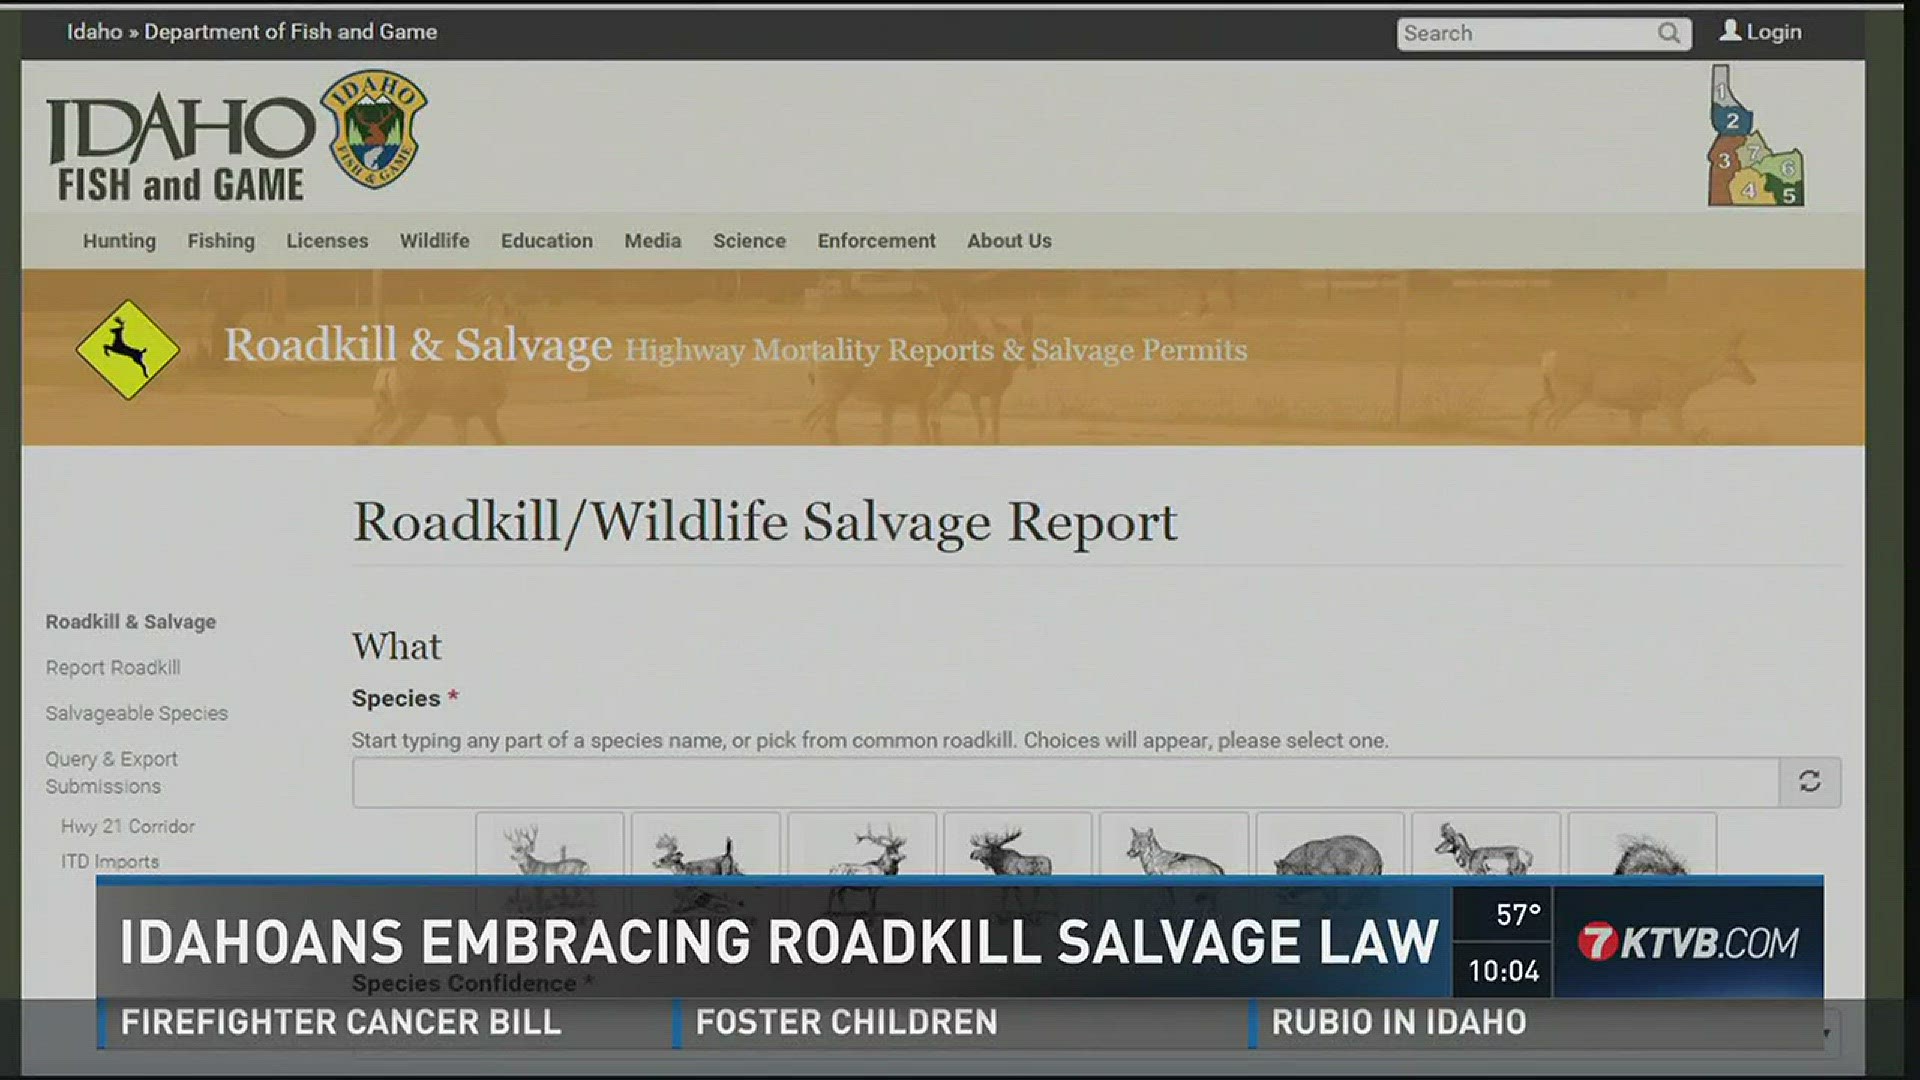 Idahoans embracing roadkill salvage law.